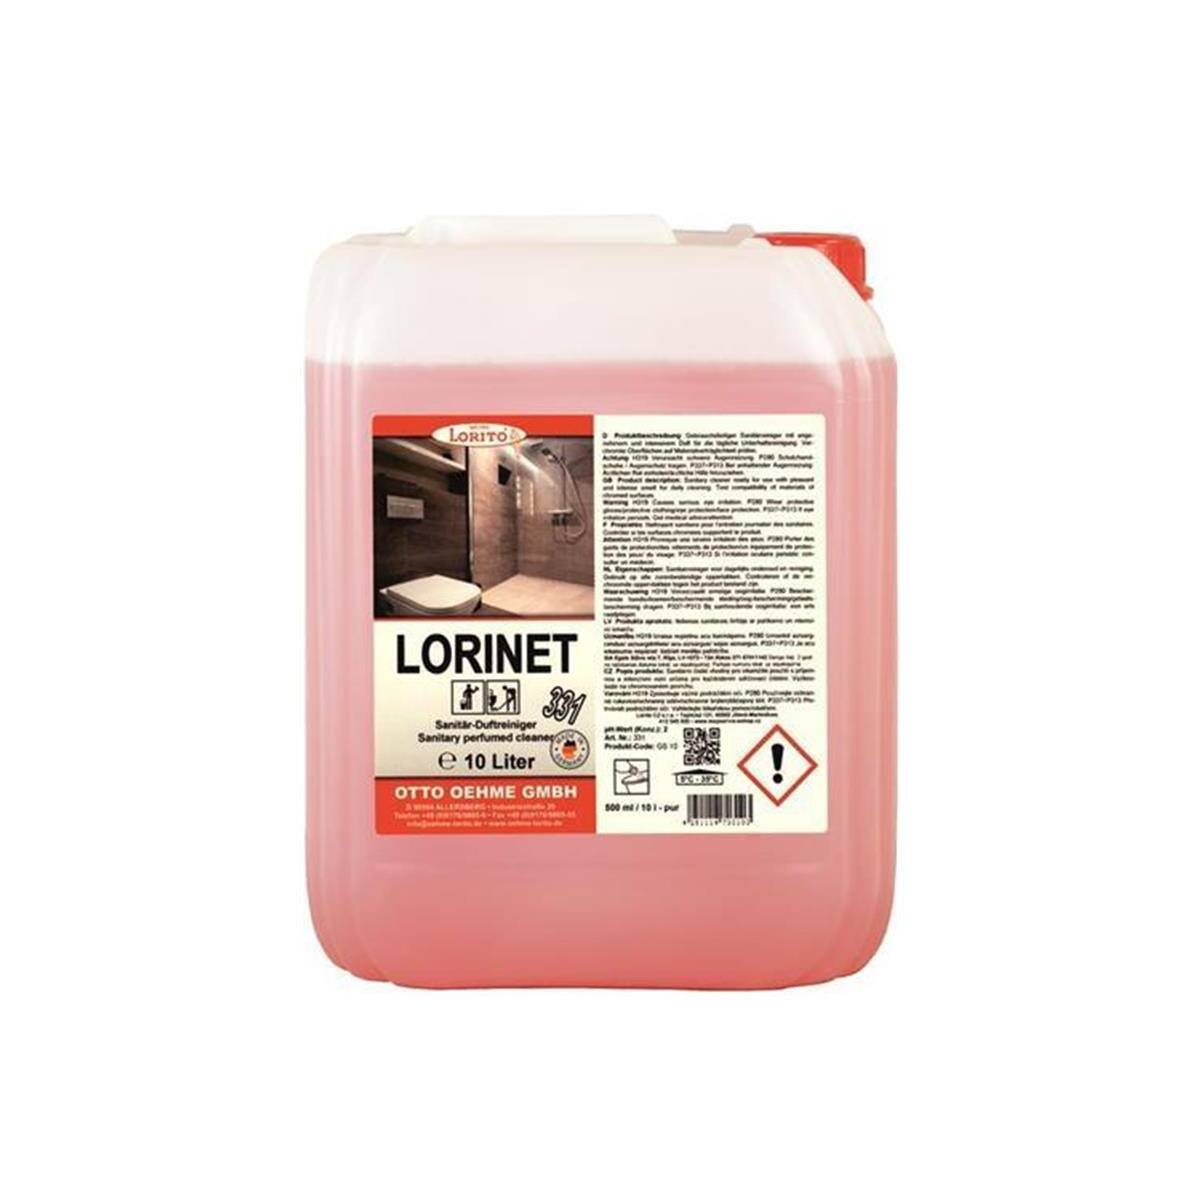 Sanitrreinger Lorinet 331 10 Liter